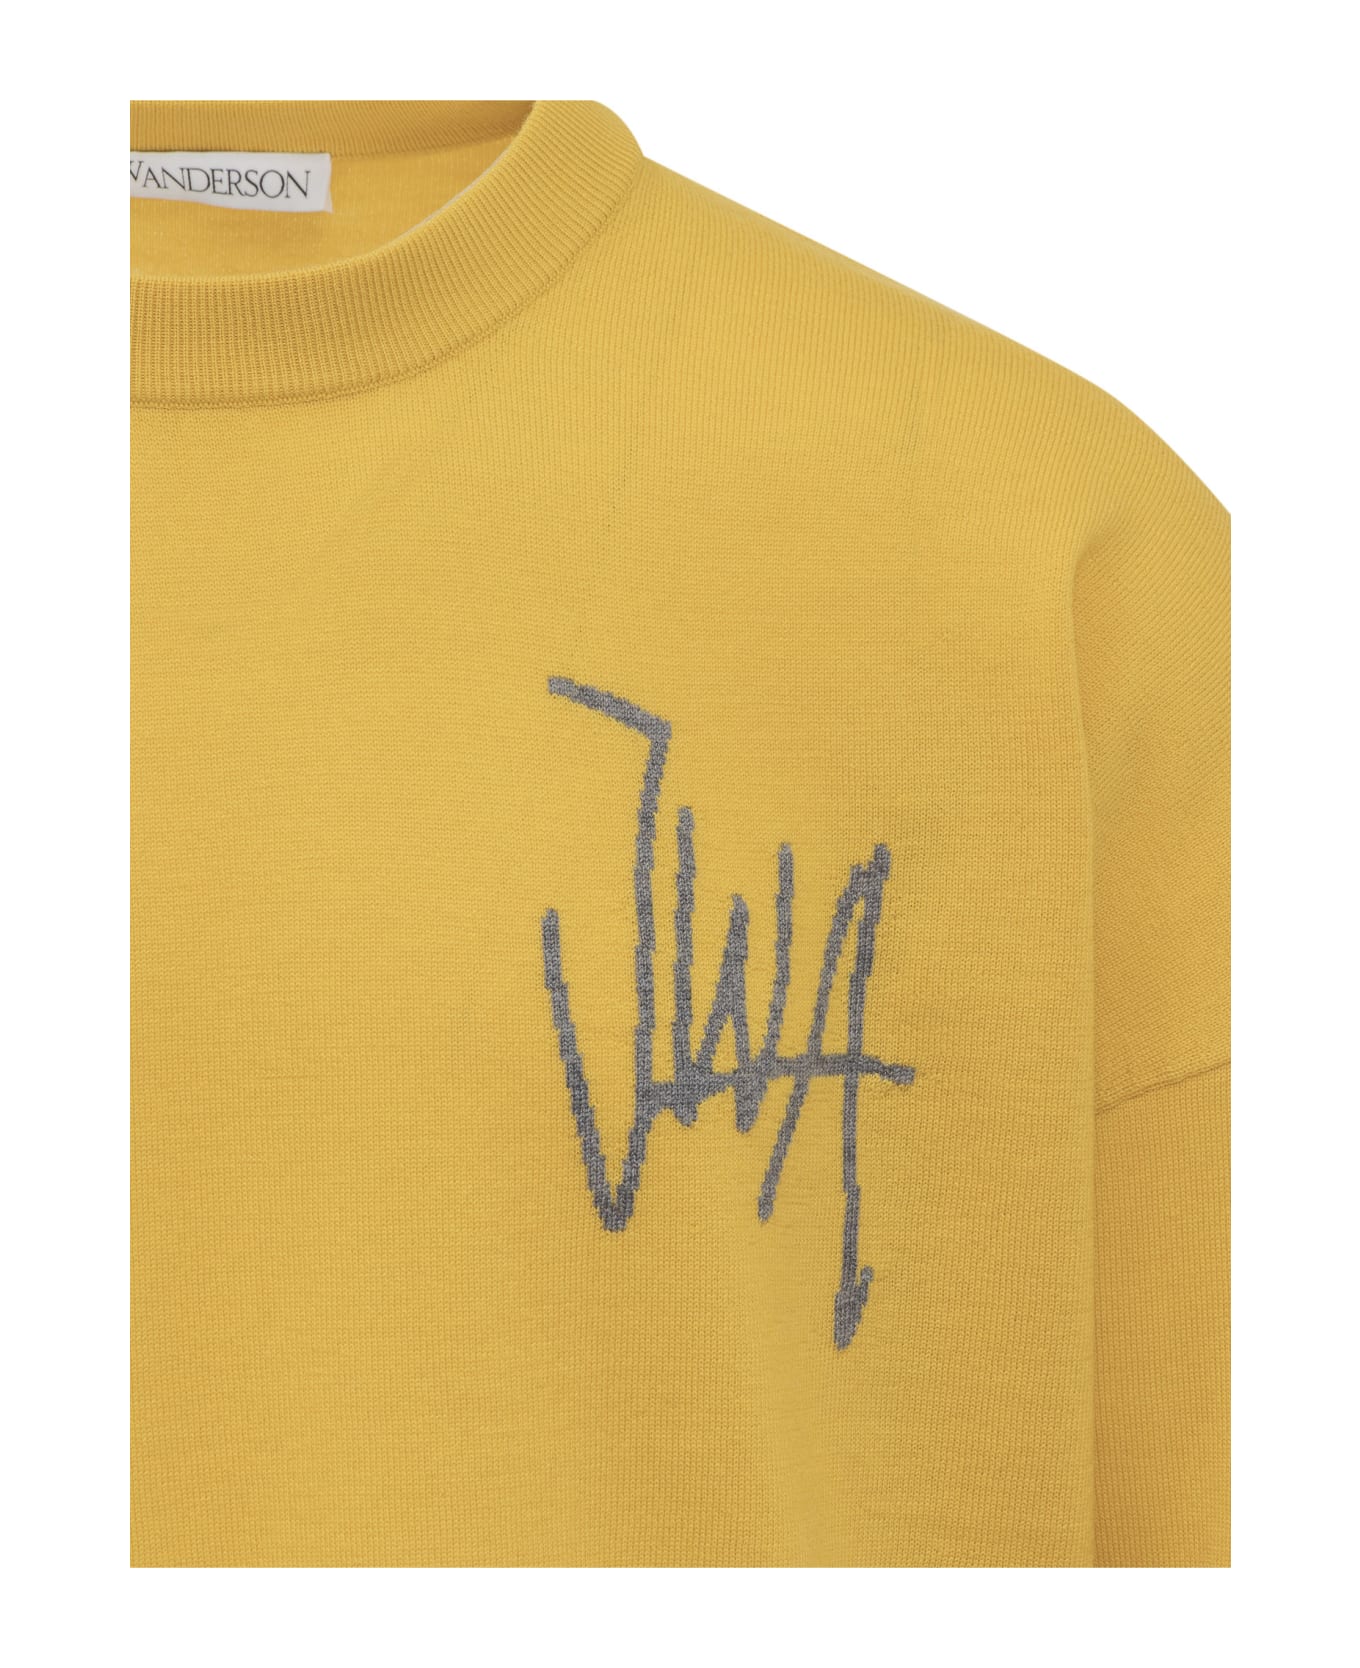 J.W. Anderson Sweater With Logo - YELLOW/GREY MELANGE フリース